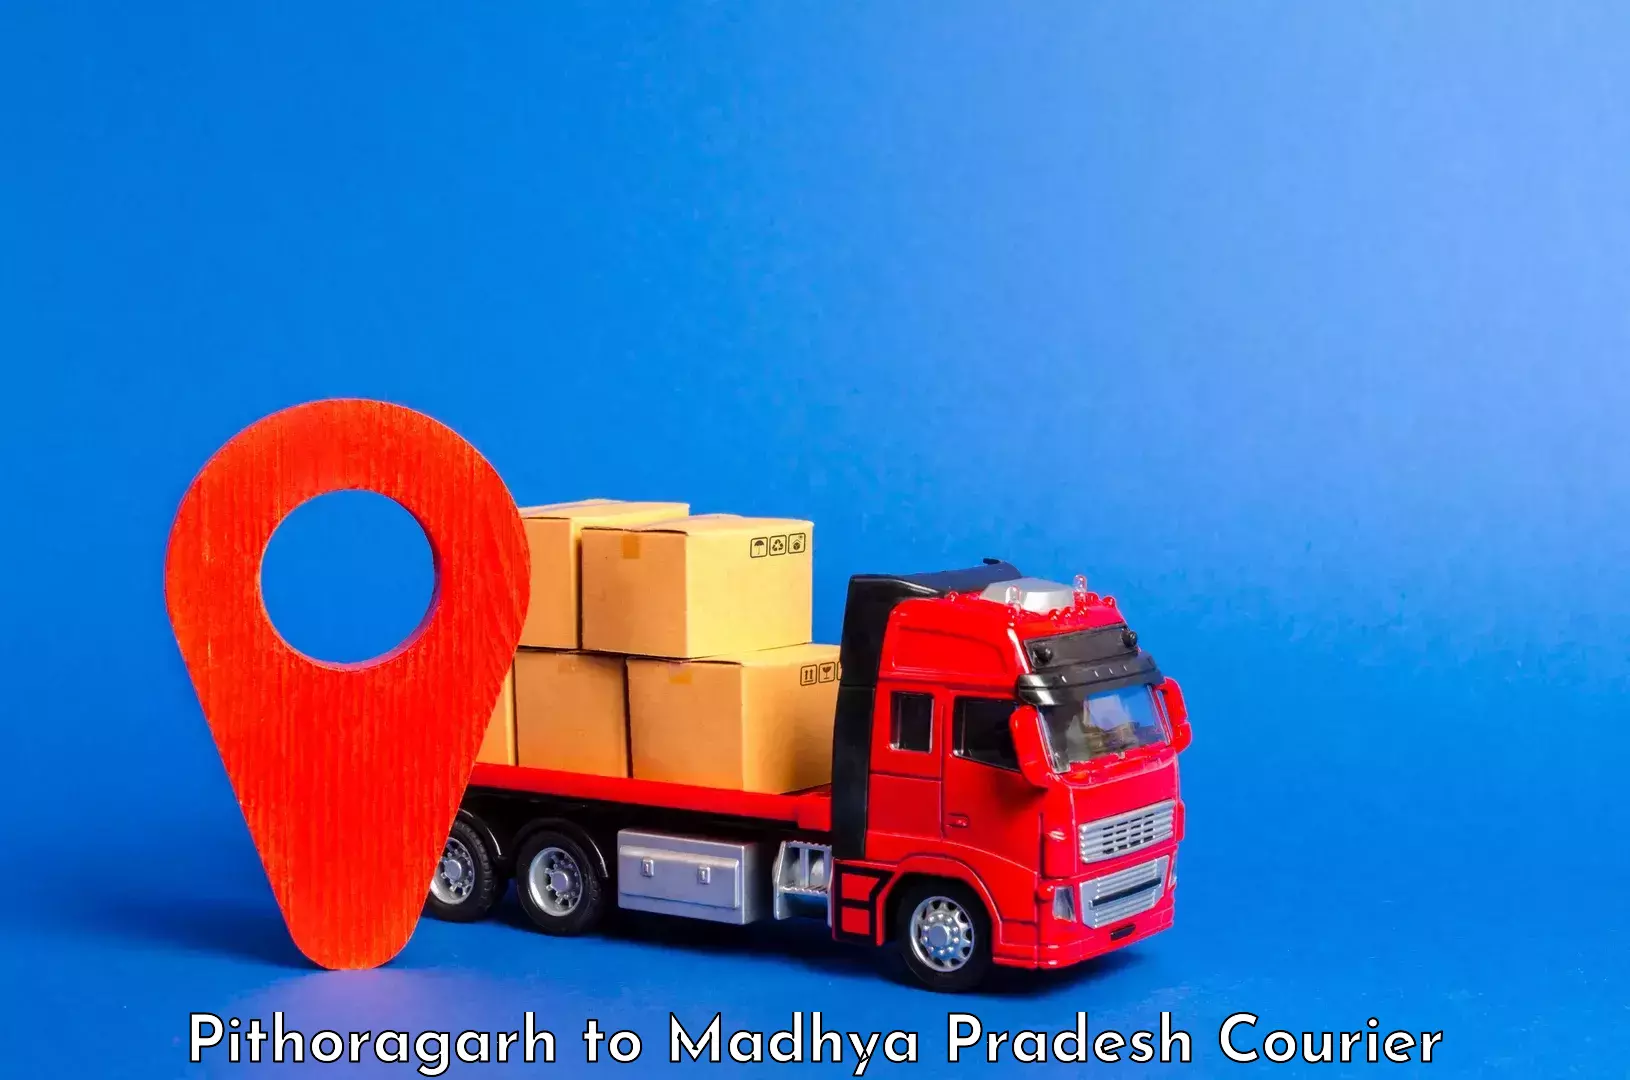 Luggage shipment specialists Pithoragarh to Madhya Pradesh